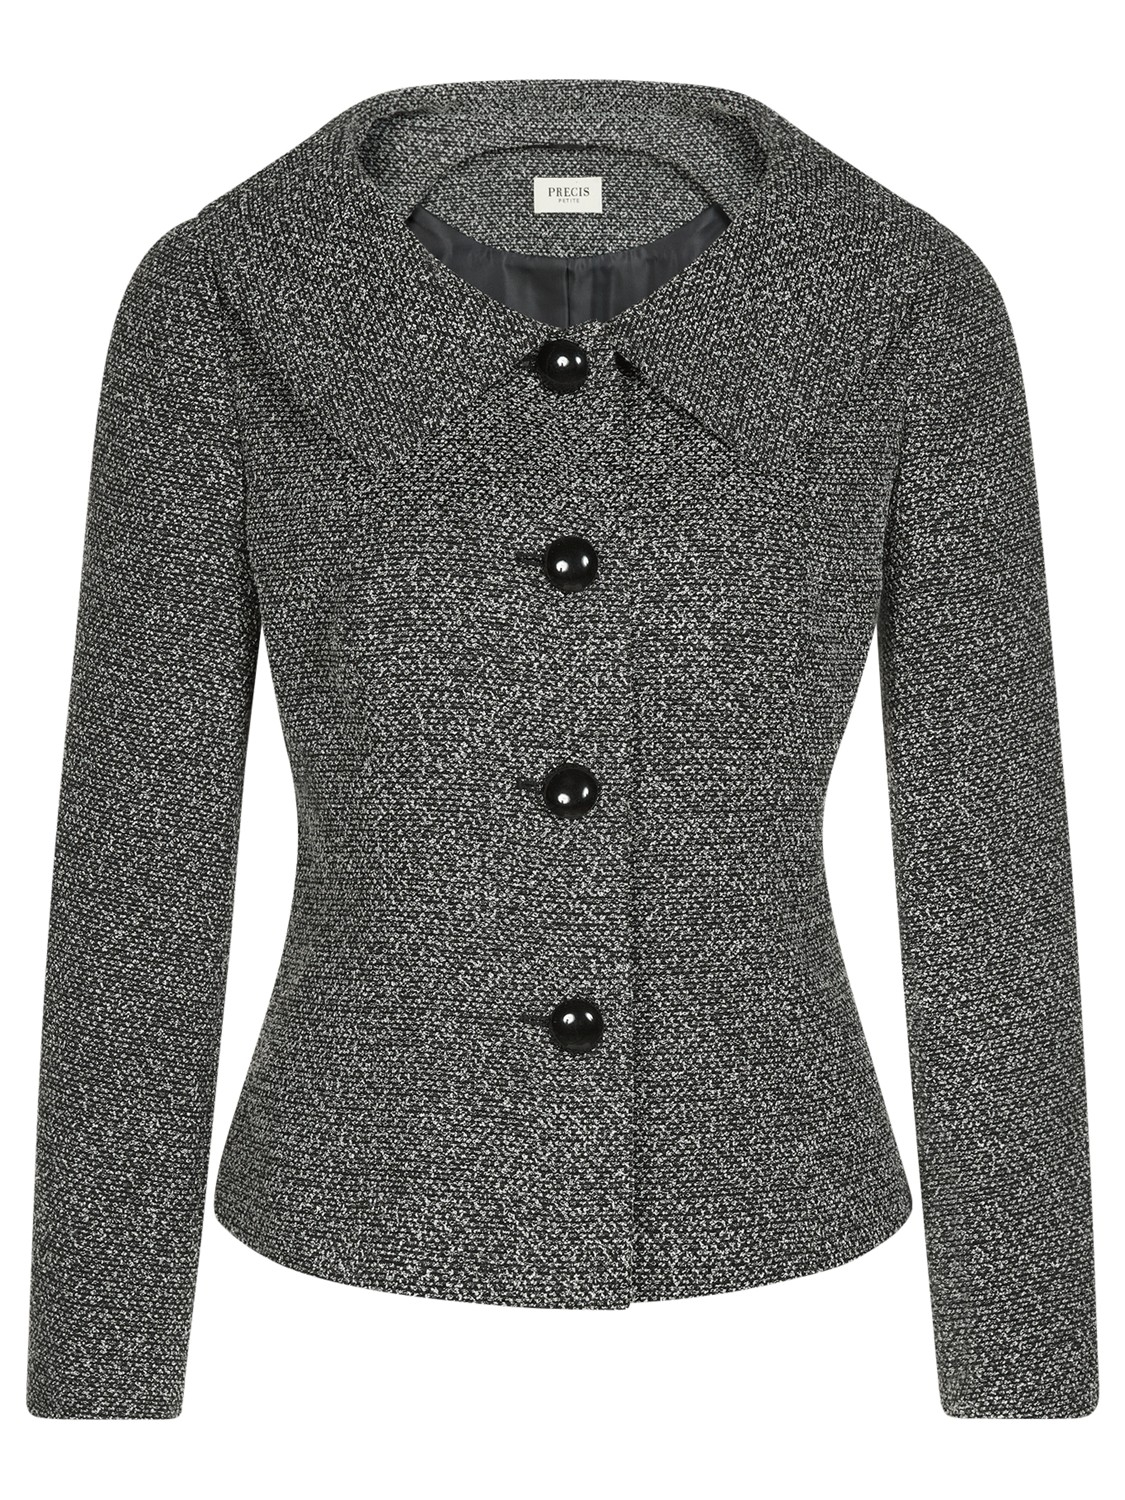 Precis Petite Tweed Boucle Jacket in Gray (grey) | Lyst